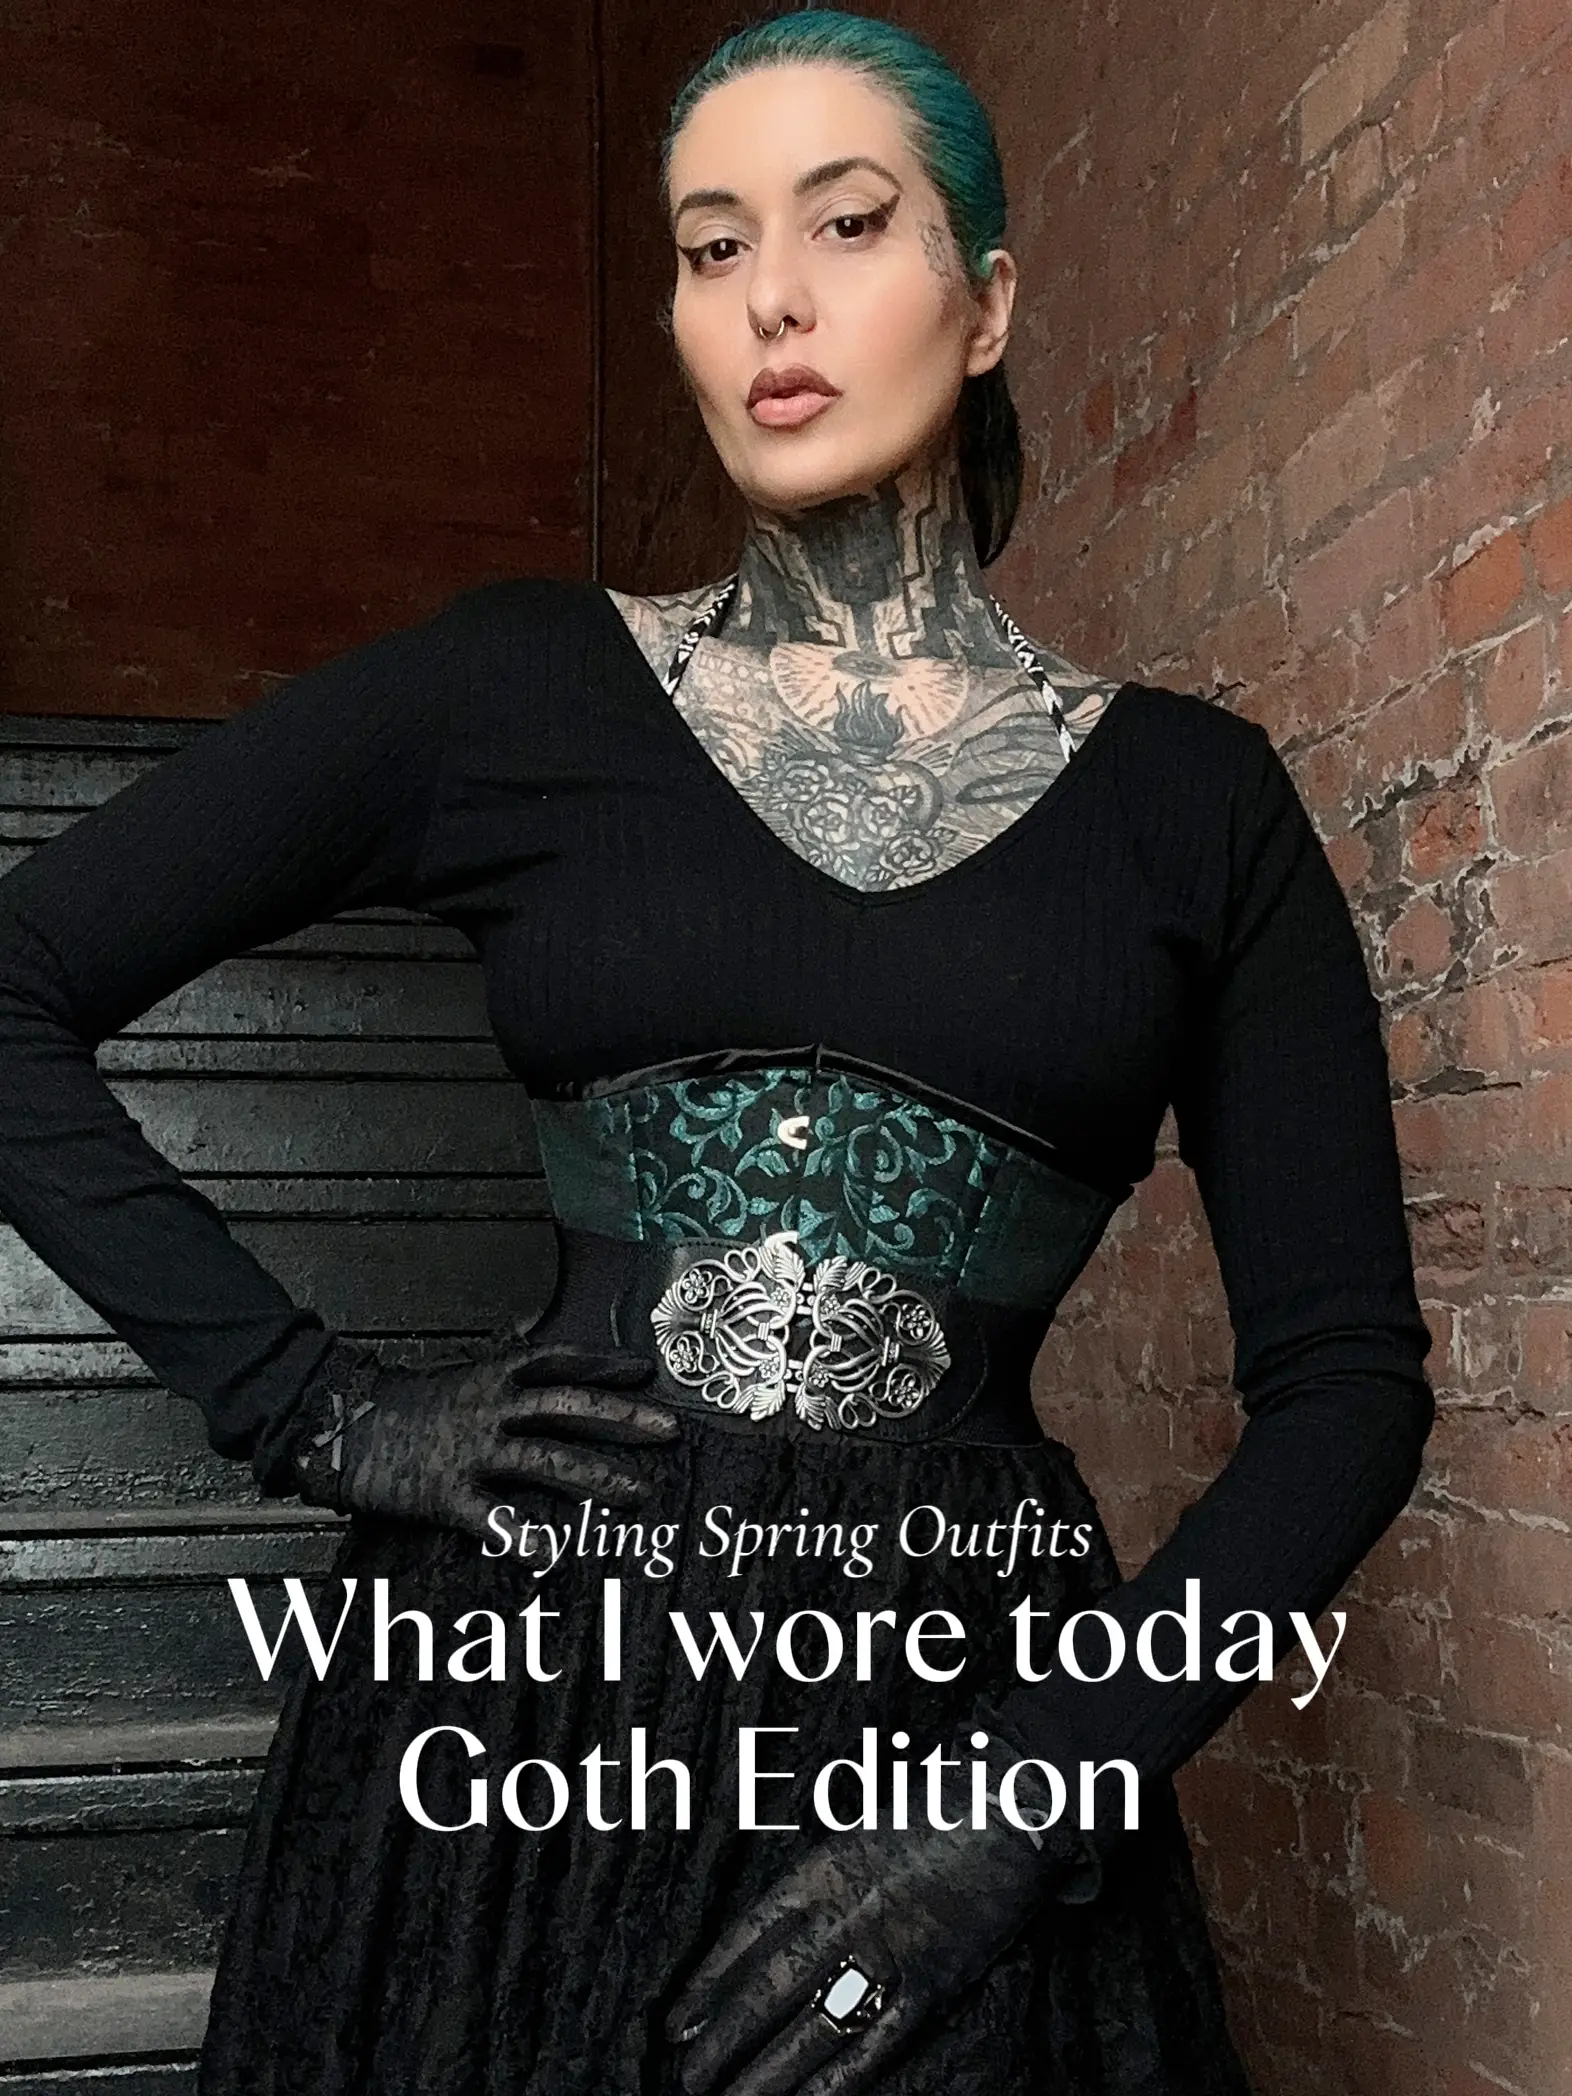 Goth Fashion 101 - From Gothic Origins to Modern Styles